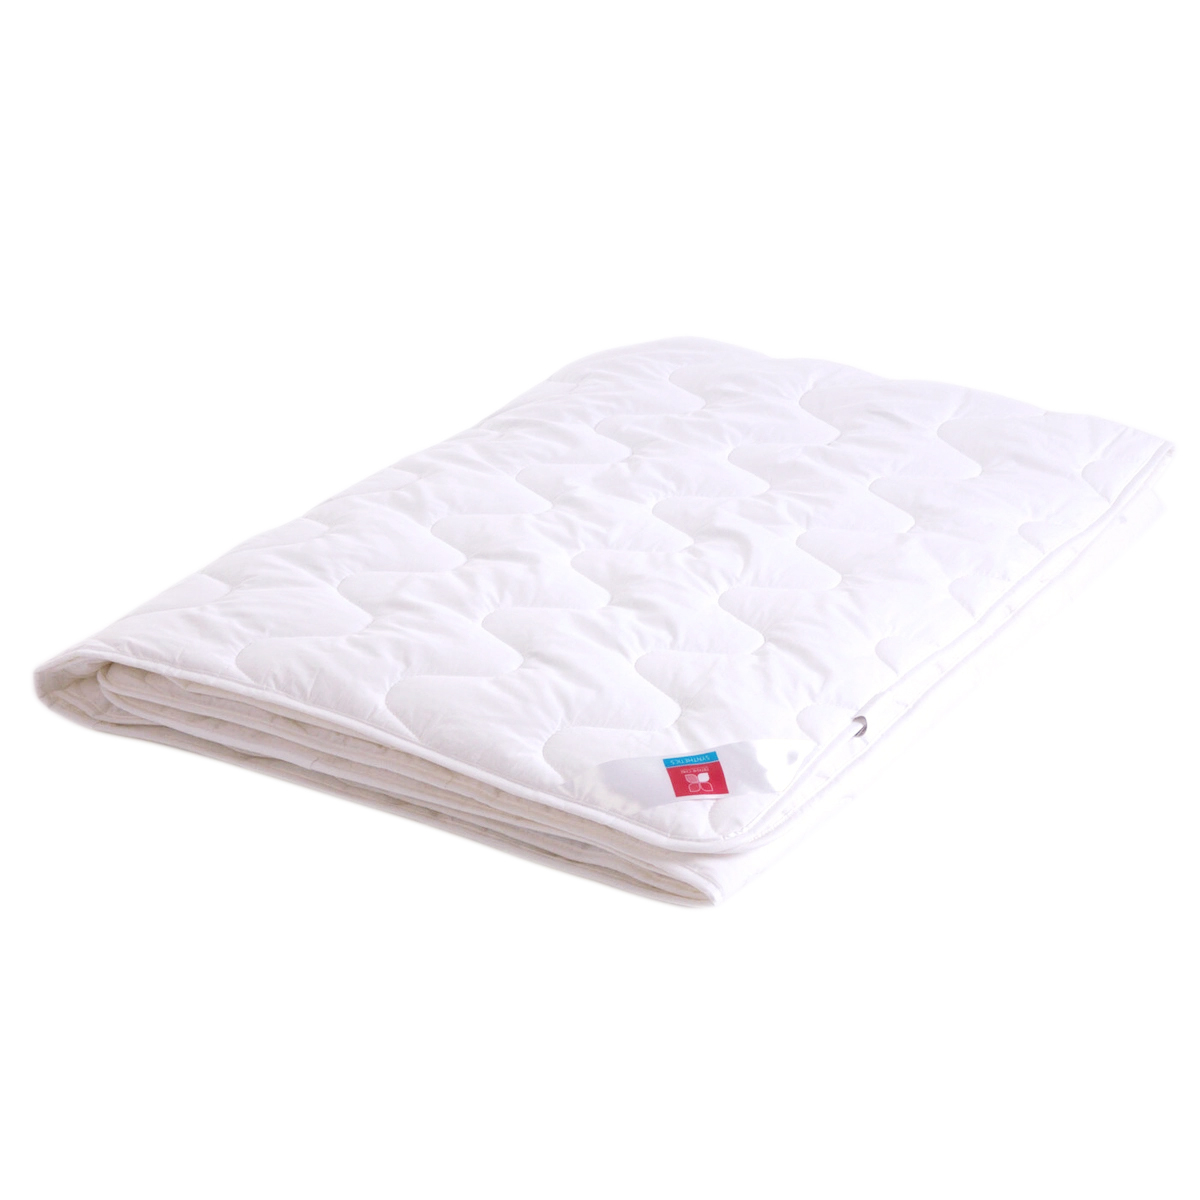 Одеяло Лель Легкое (200х220 см), размер 200х220 см, цвет белый lsn90299 Одеяло Лель Легкое (200х220 см) - фото 1